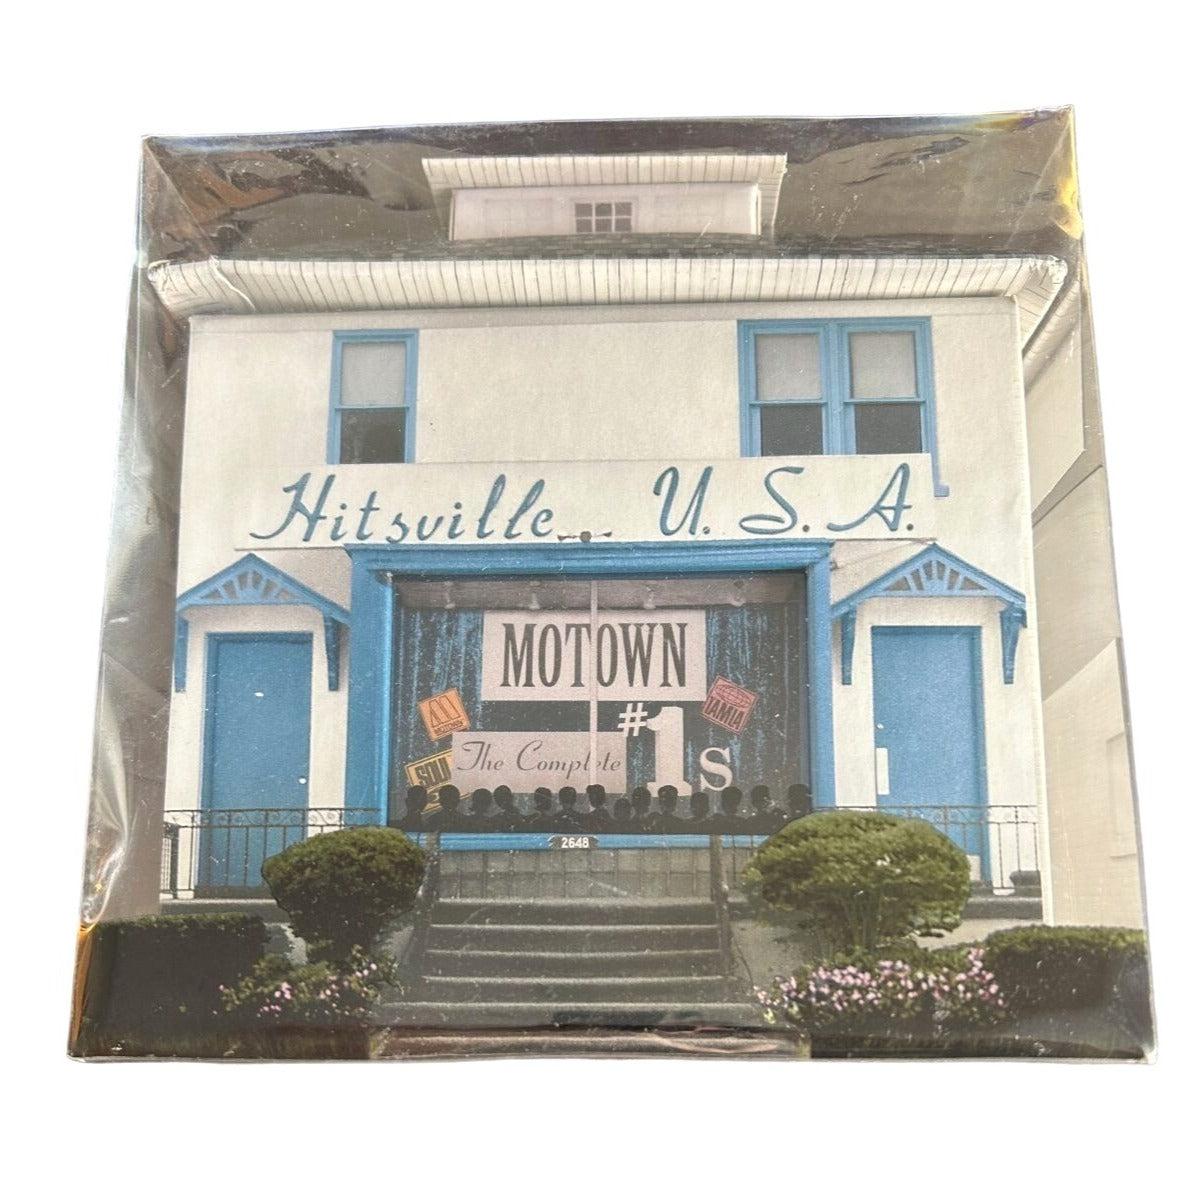 Motown: The Complete No. 1's - Hitsville, U.S.A. (10 CD, 2008) R&B Soul Detroit